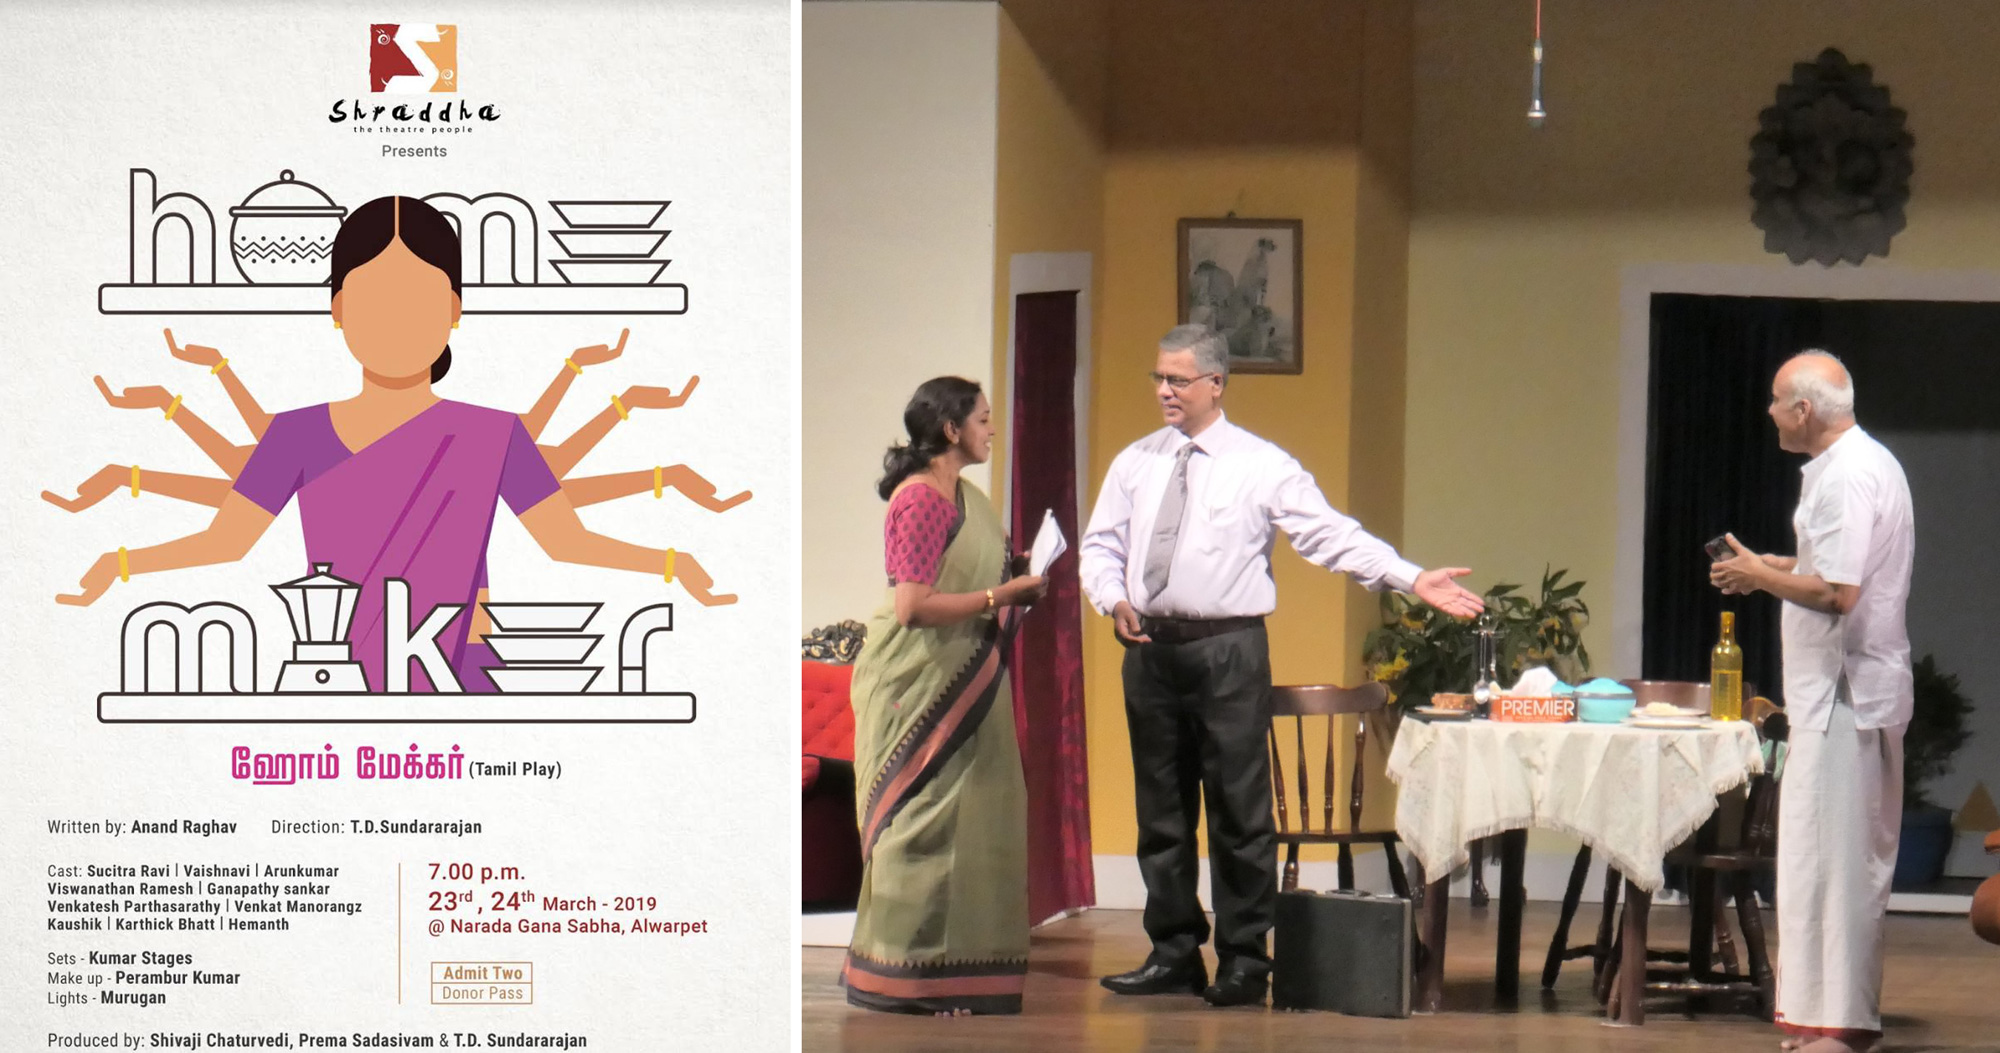 Homemaker – Tamil Play by Shraddha